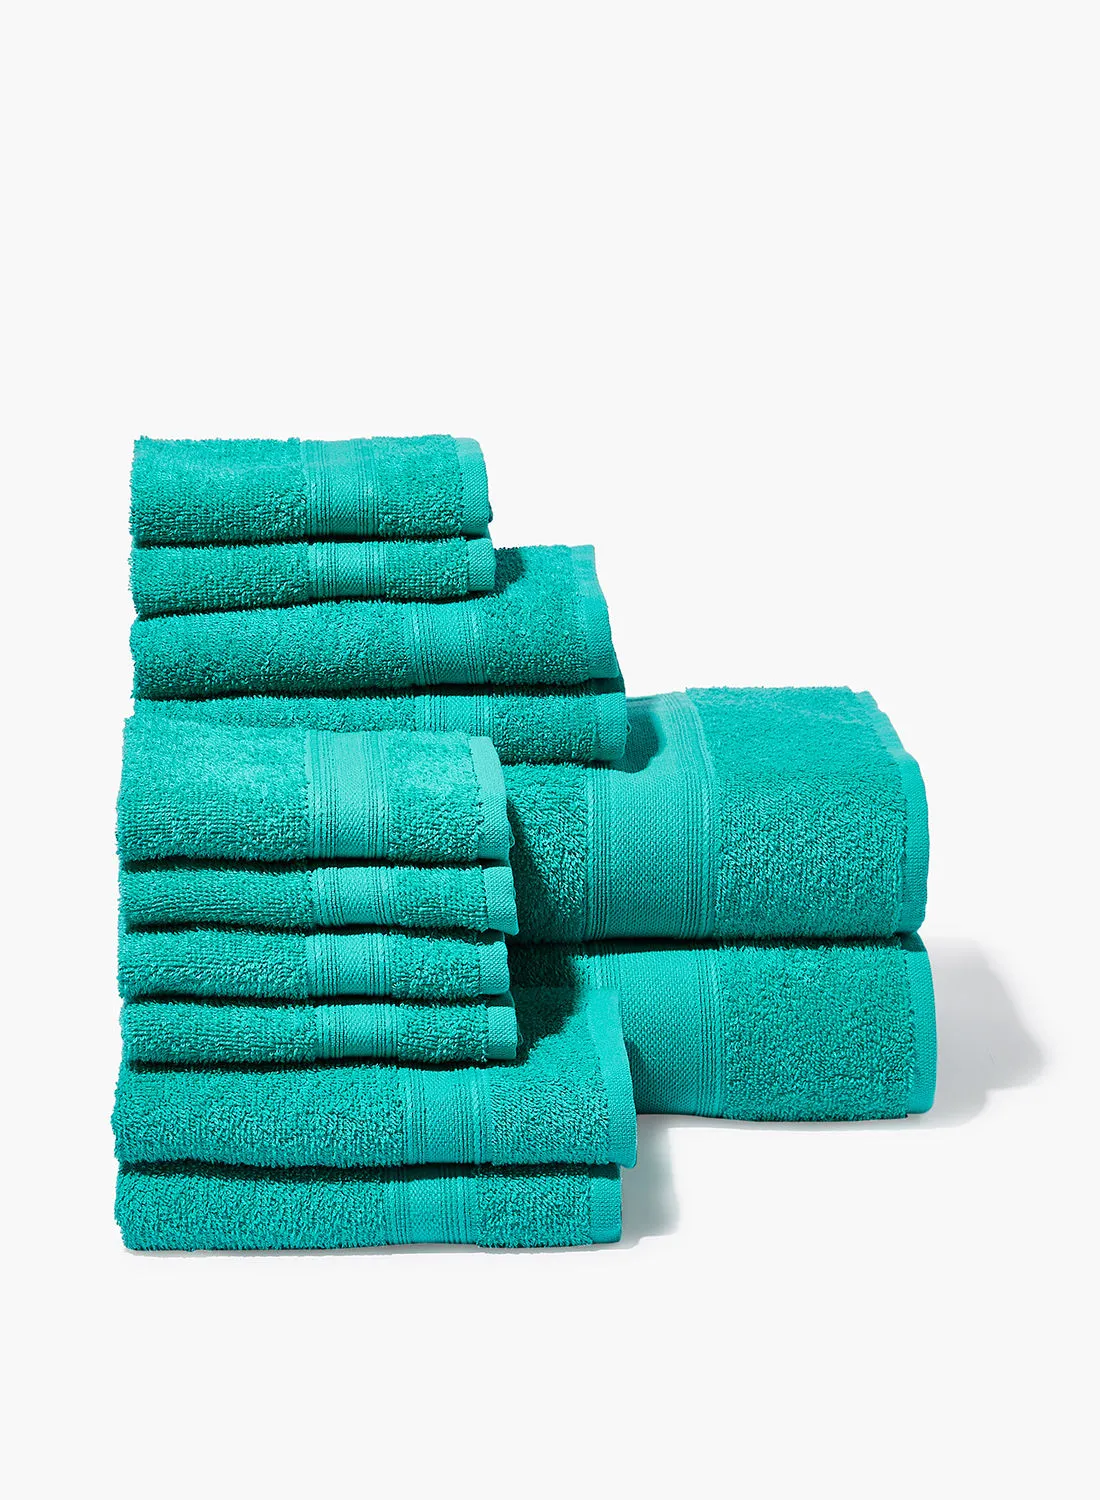 Amal 12 Piece Bathroom Towel Set - 400 GSM 100% Cotton Terry - 12 Face Towel - Emerald Color -Quick Dry - Super Absorbent